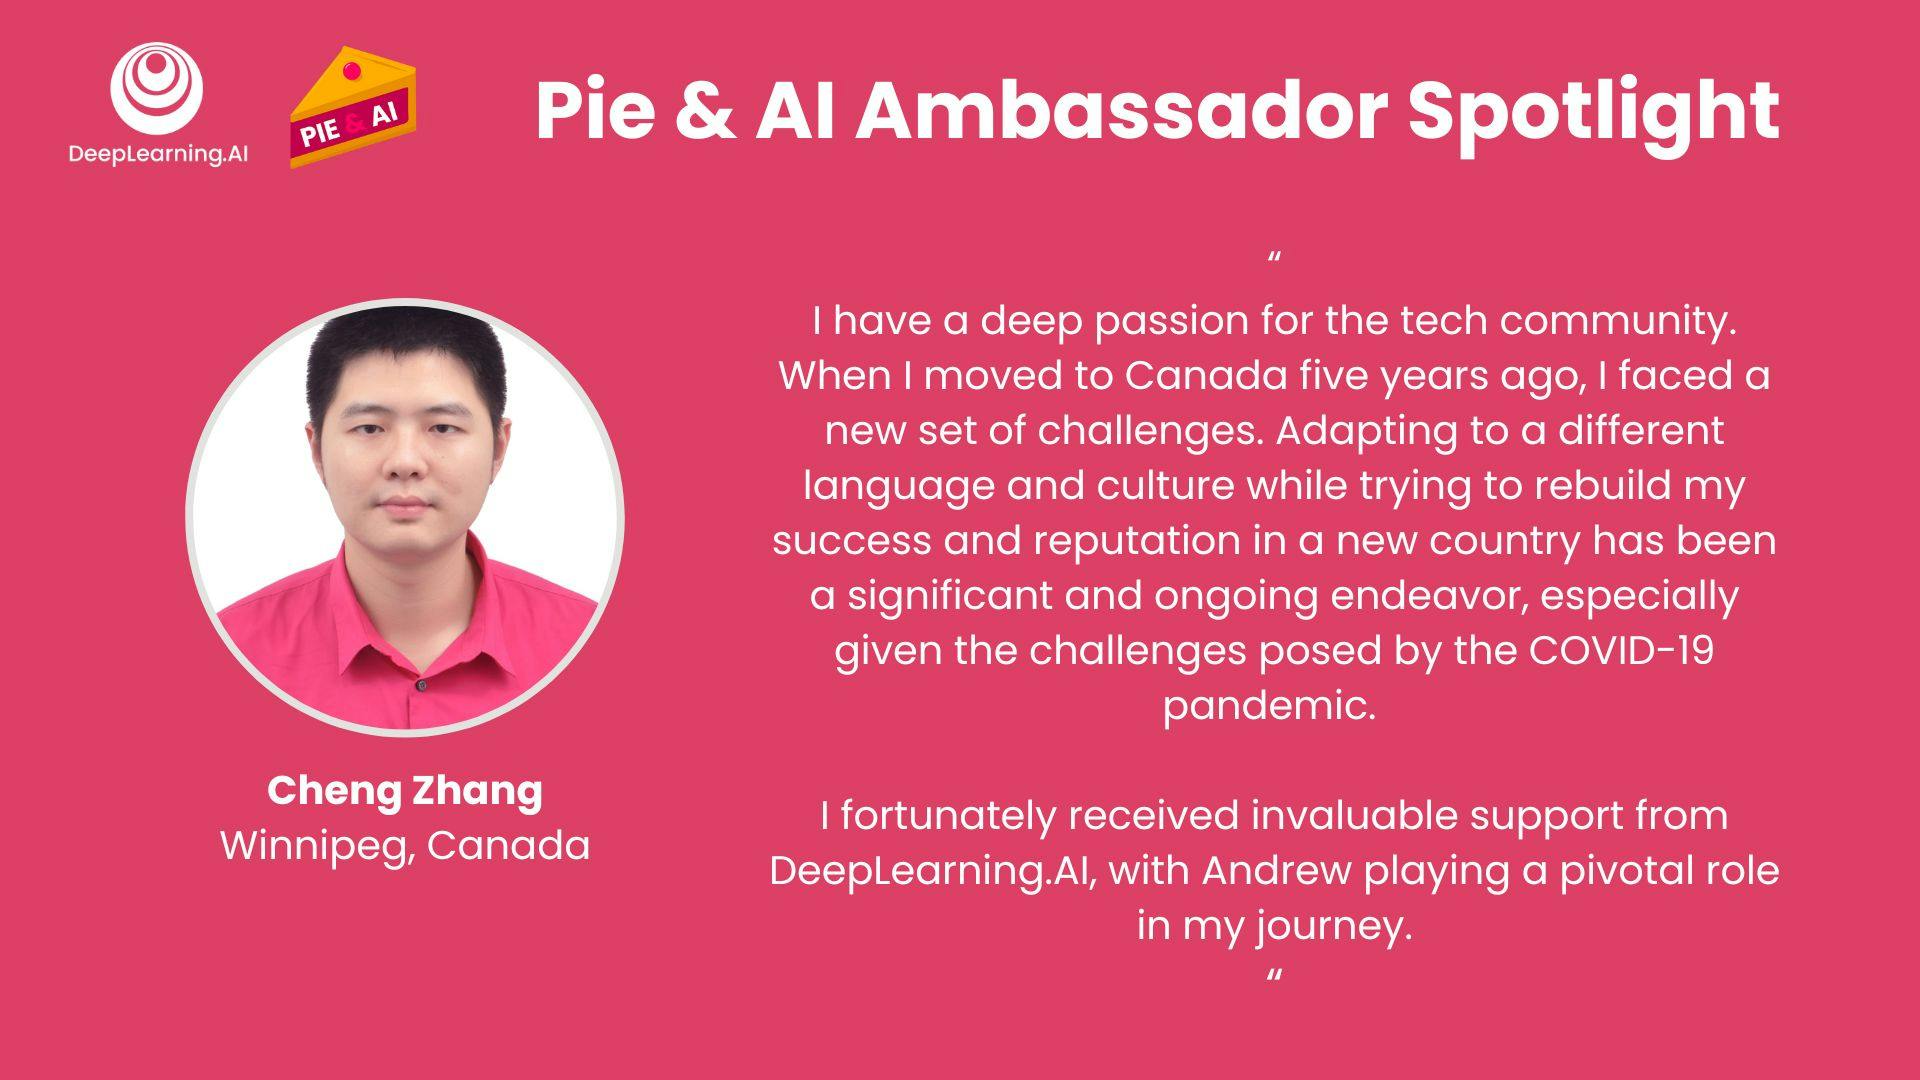 Pie & AI Ambassador Cheng Zhang